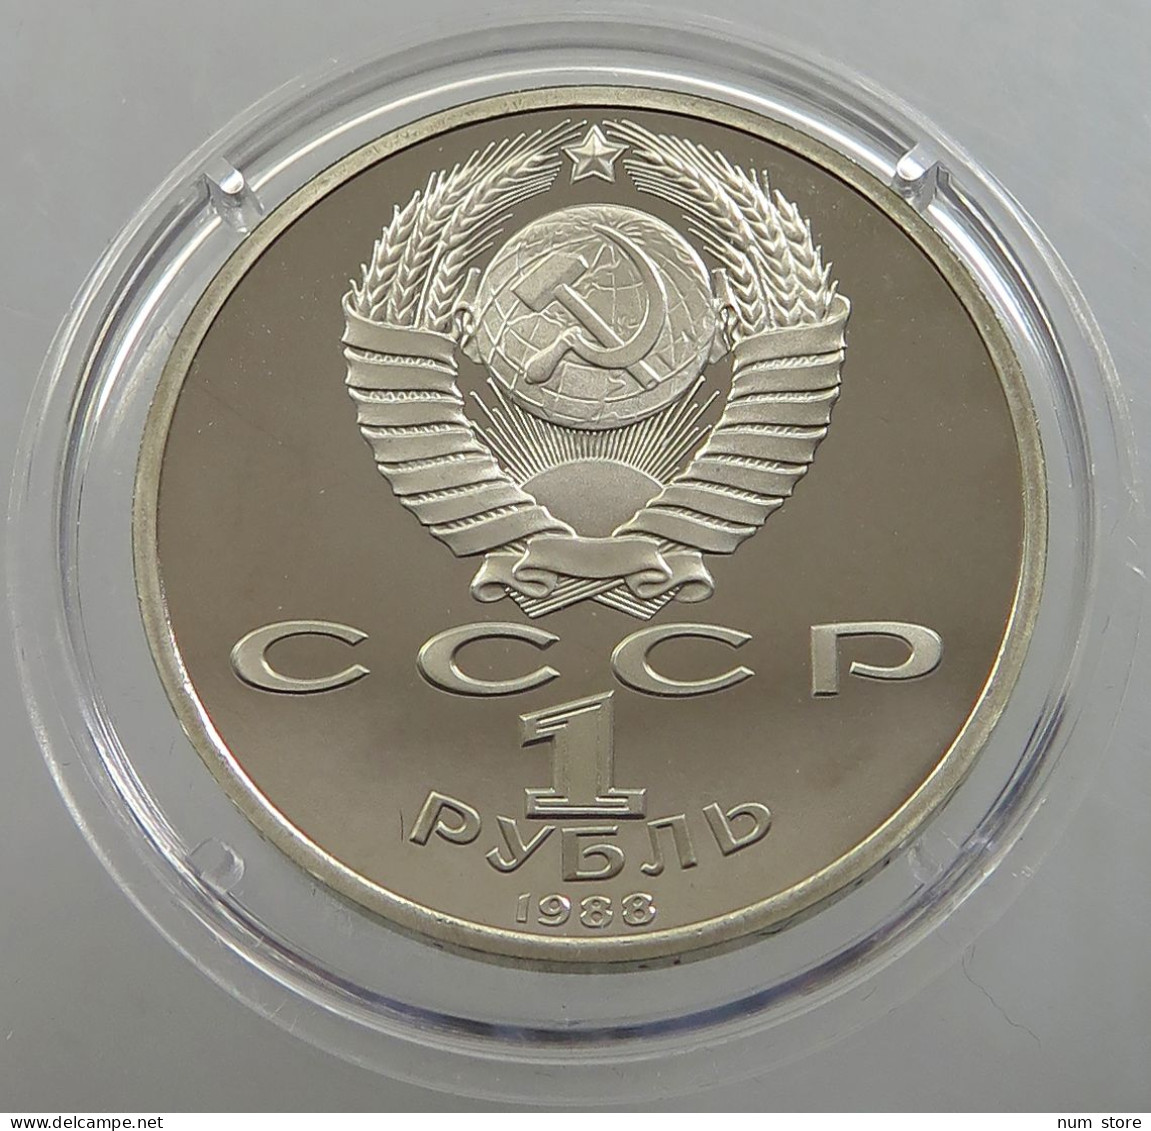 RUSSIA USSR 1 ROUBLE 1988 GORKI PROOF #sm14 0503 - Rusland